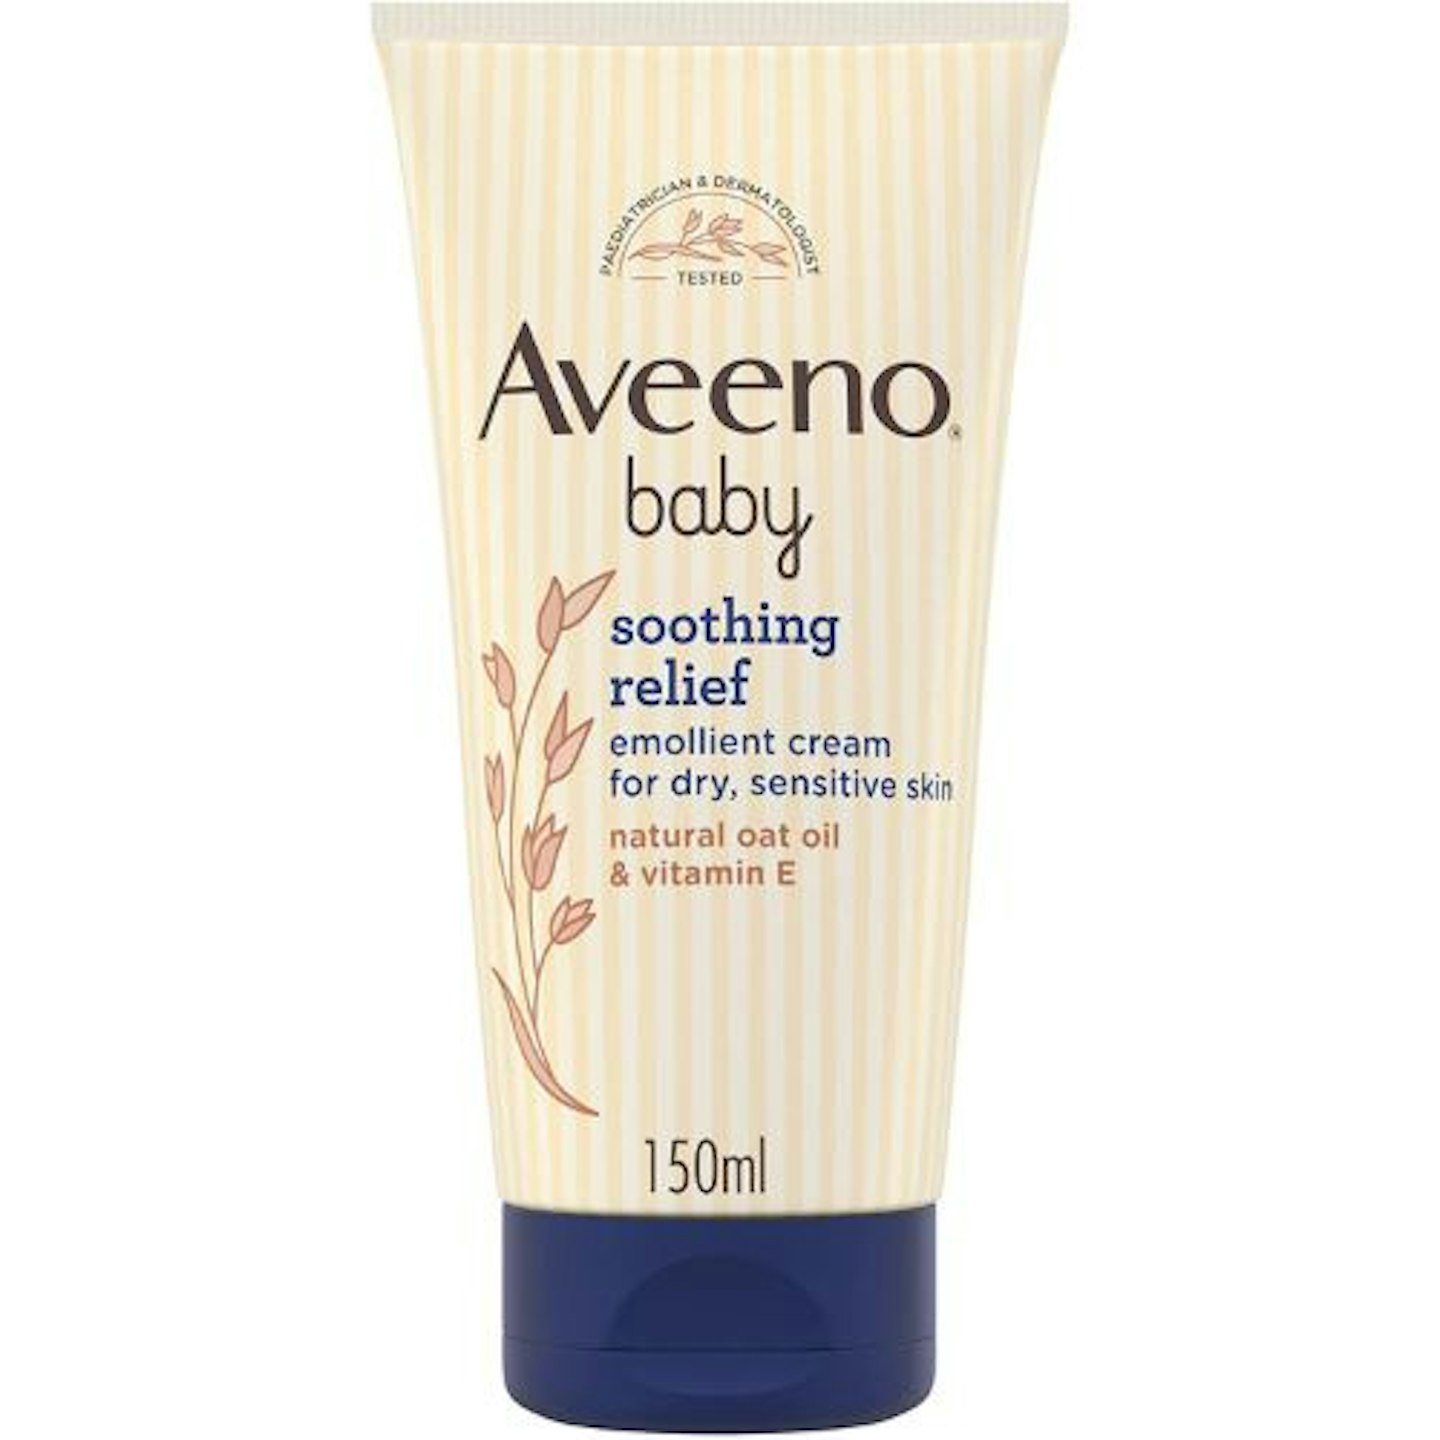 AVEENO Baby Soothing Relief Emollient Cream